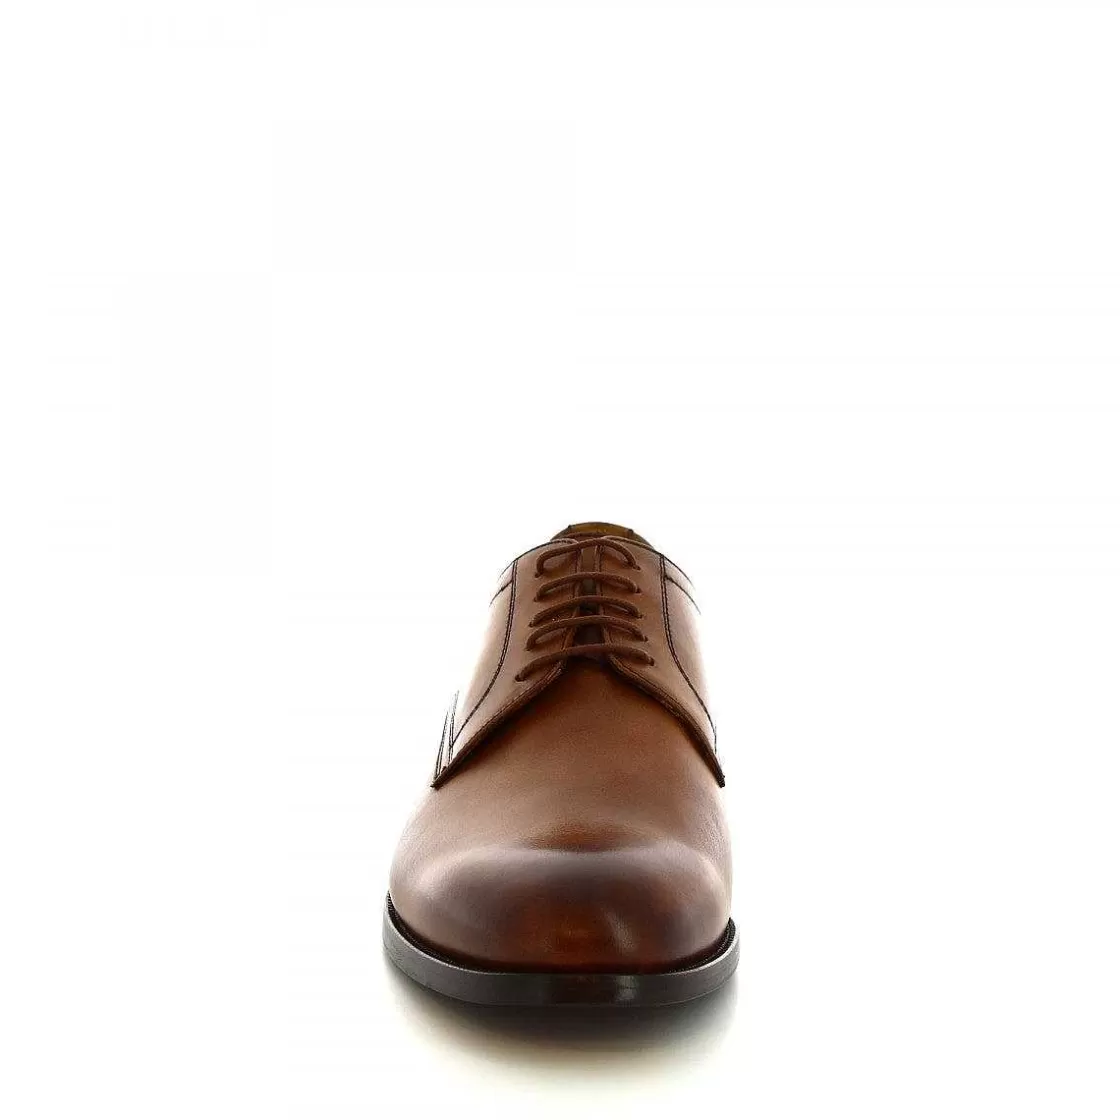 Leonardo Handmade Men'S Oxford Shoes In Tan Calf Leather Discount